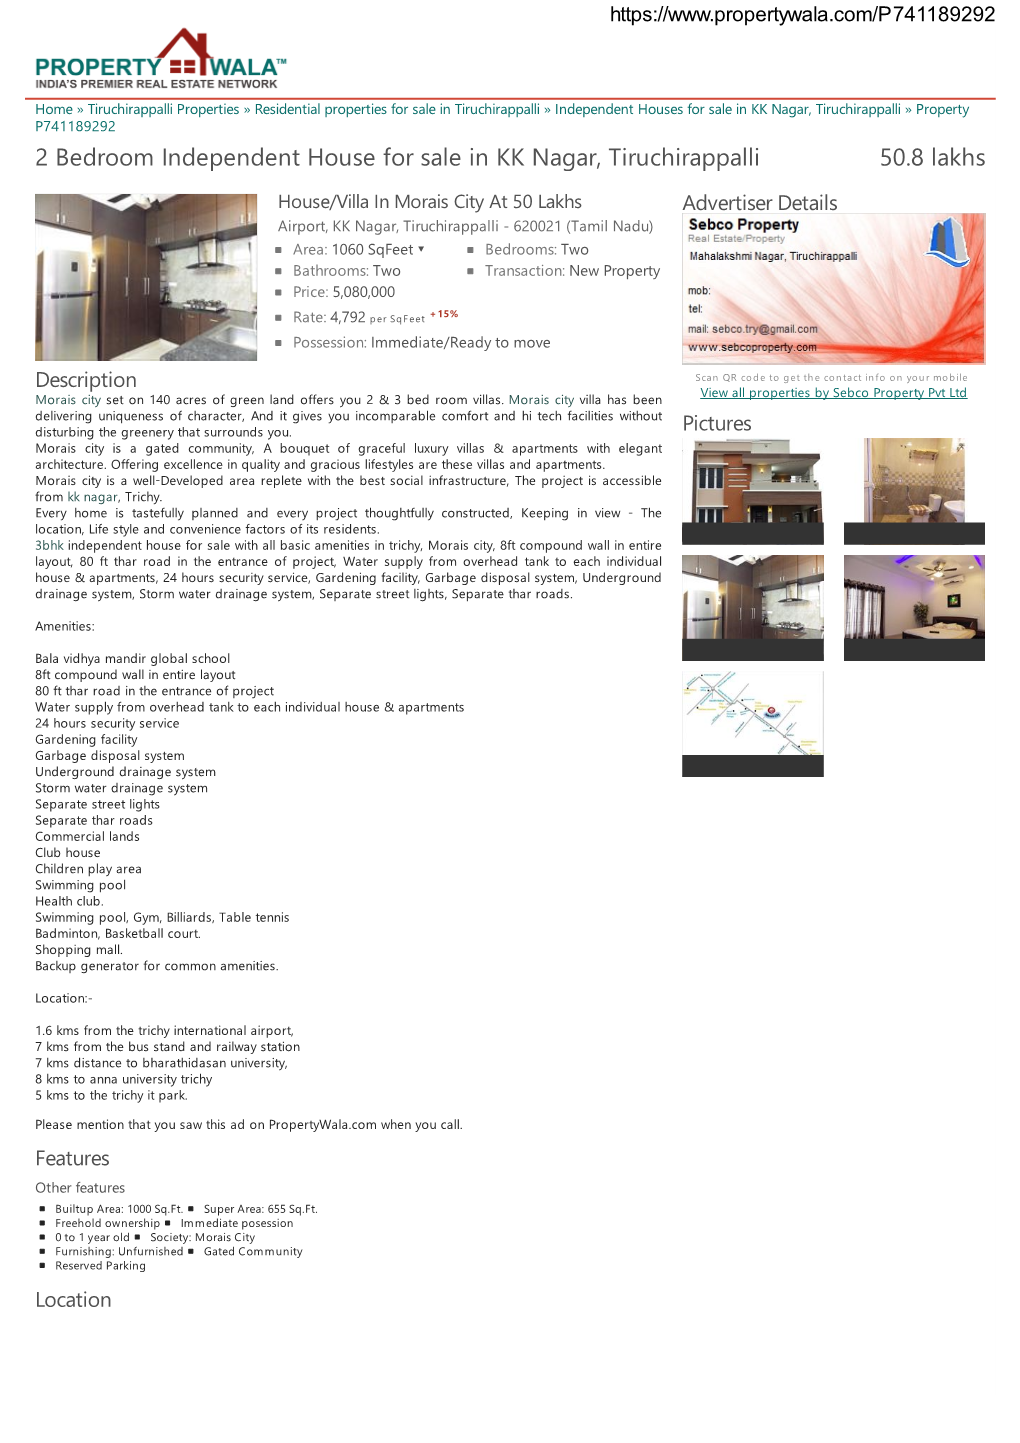 2 Bedroom Independent House for Sale in KK Nagar, Tiruchirappalli